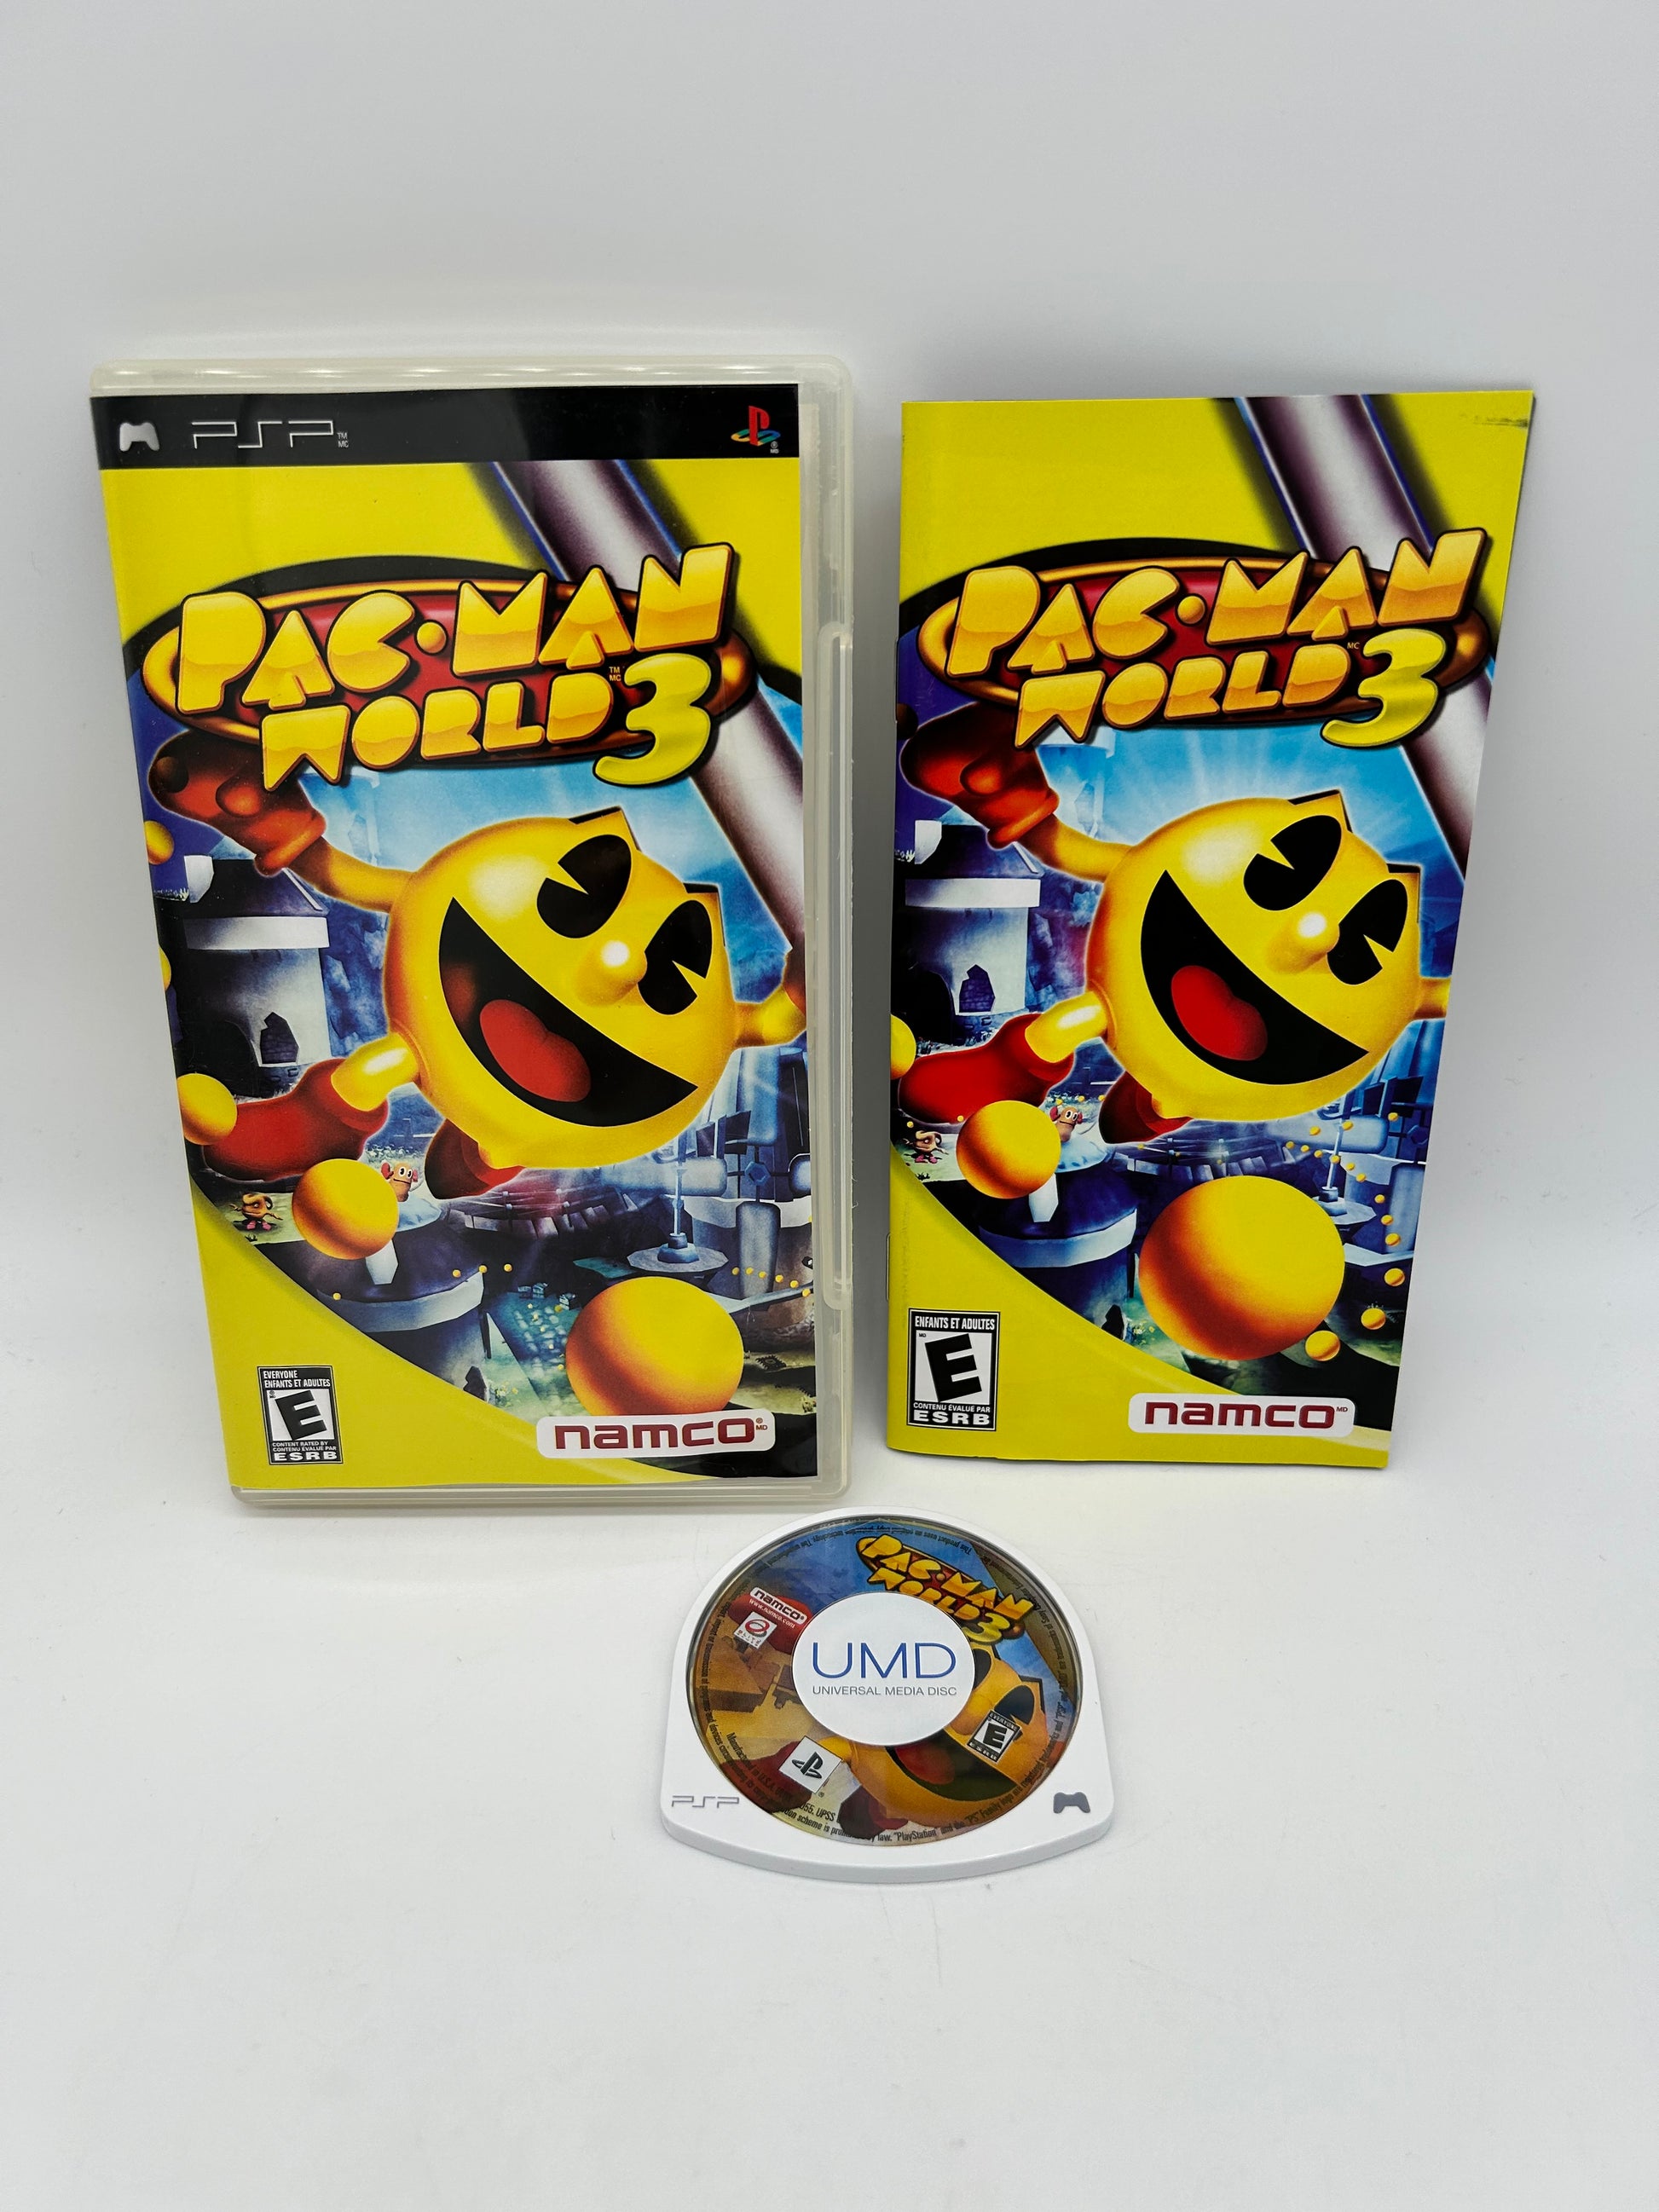 PiXEL-RETRO.COM : SONY PLAYSTATION PORTABLE (PSP) COMPLET CIB BOX MAAL GAME NTSC PAC-MAN WORLD 3